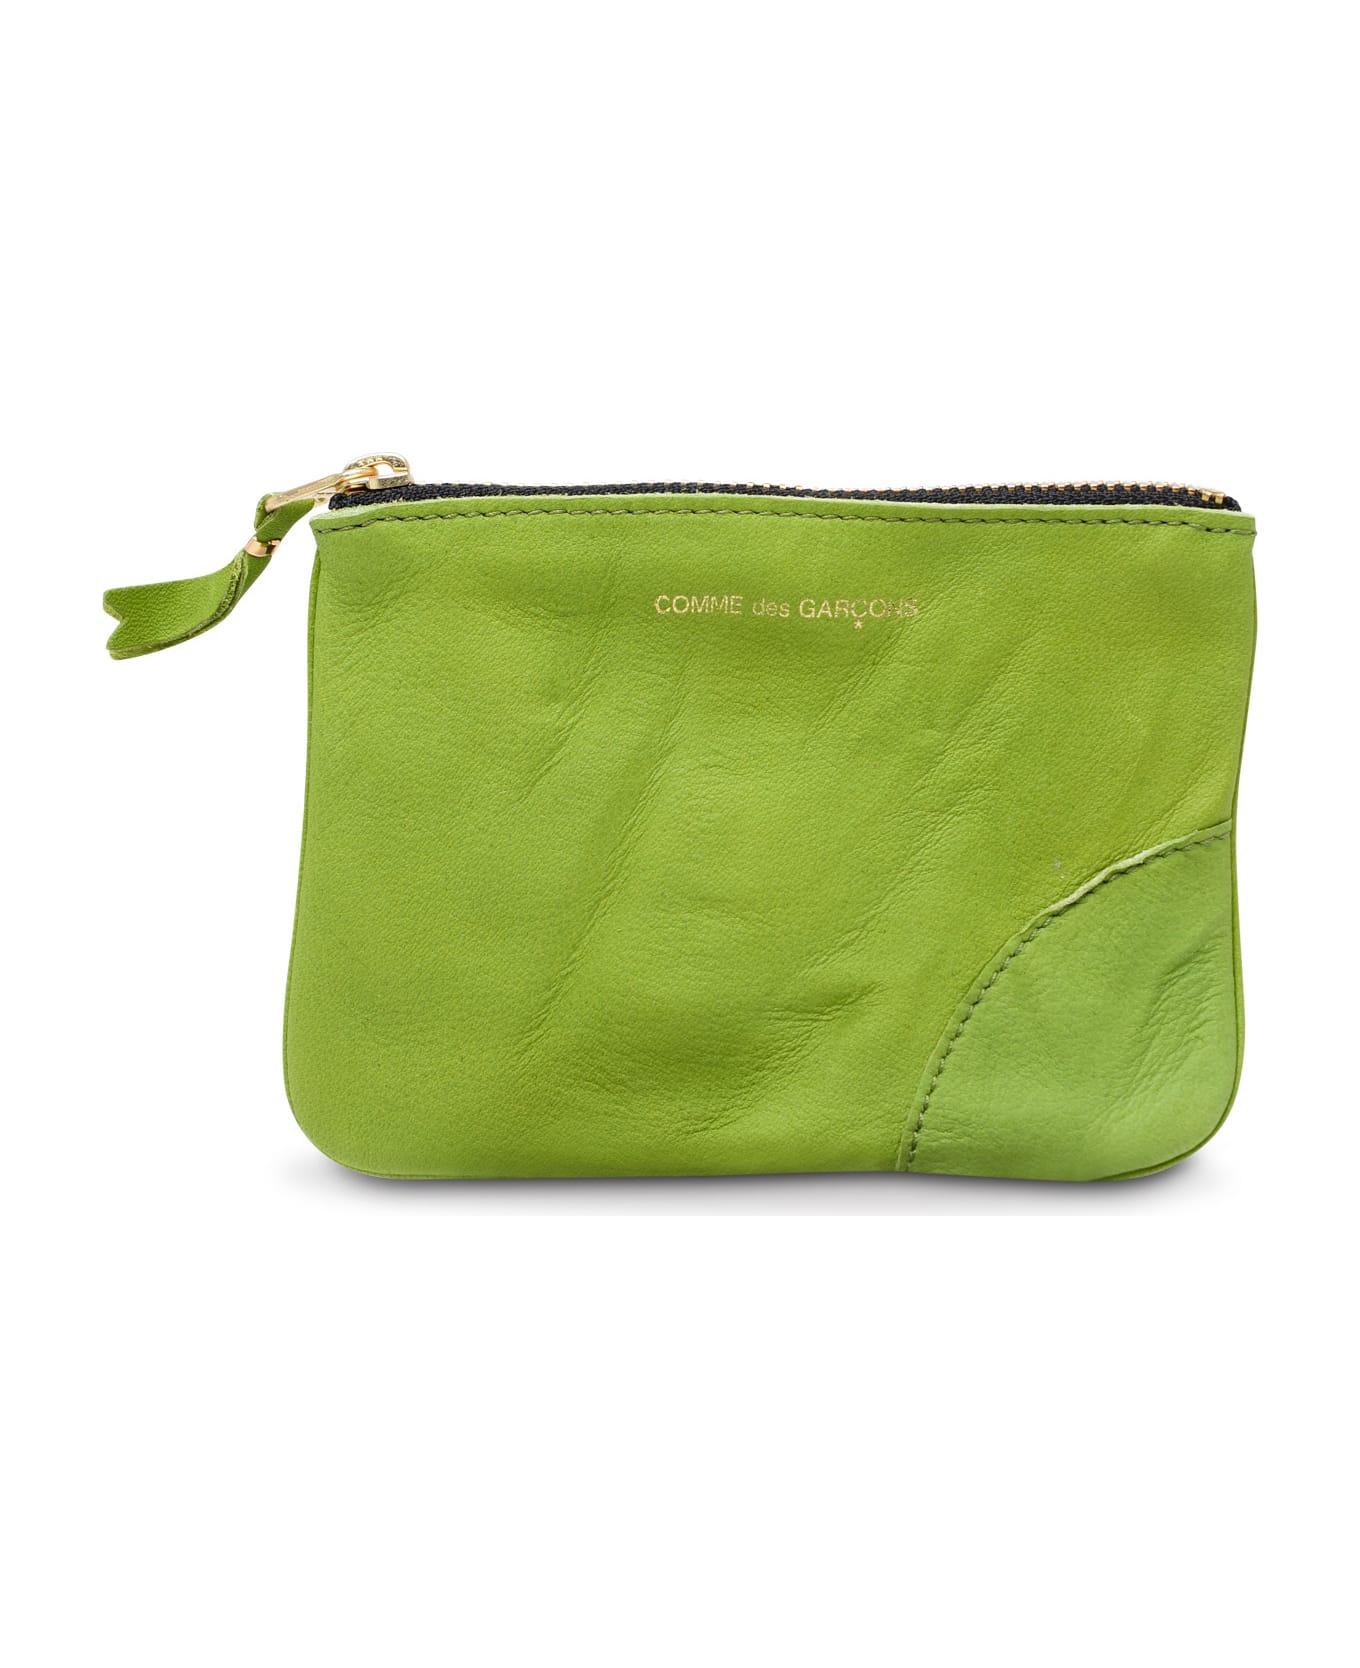 Comme des Garçons Wallet Green Leather Card Holder - Green